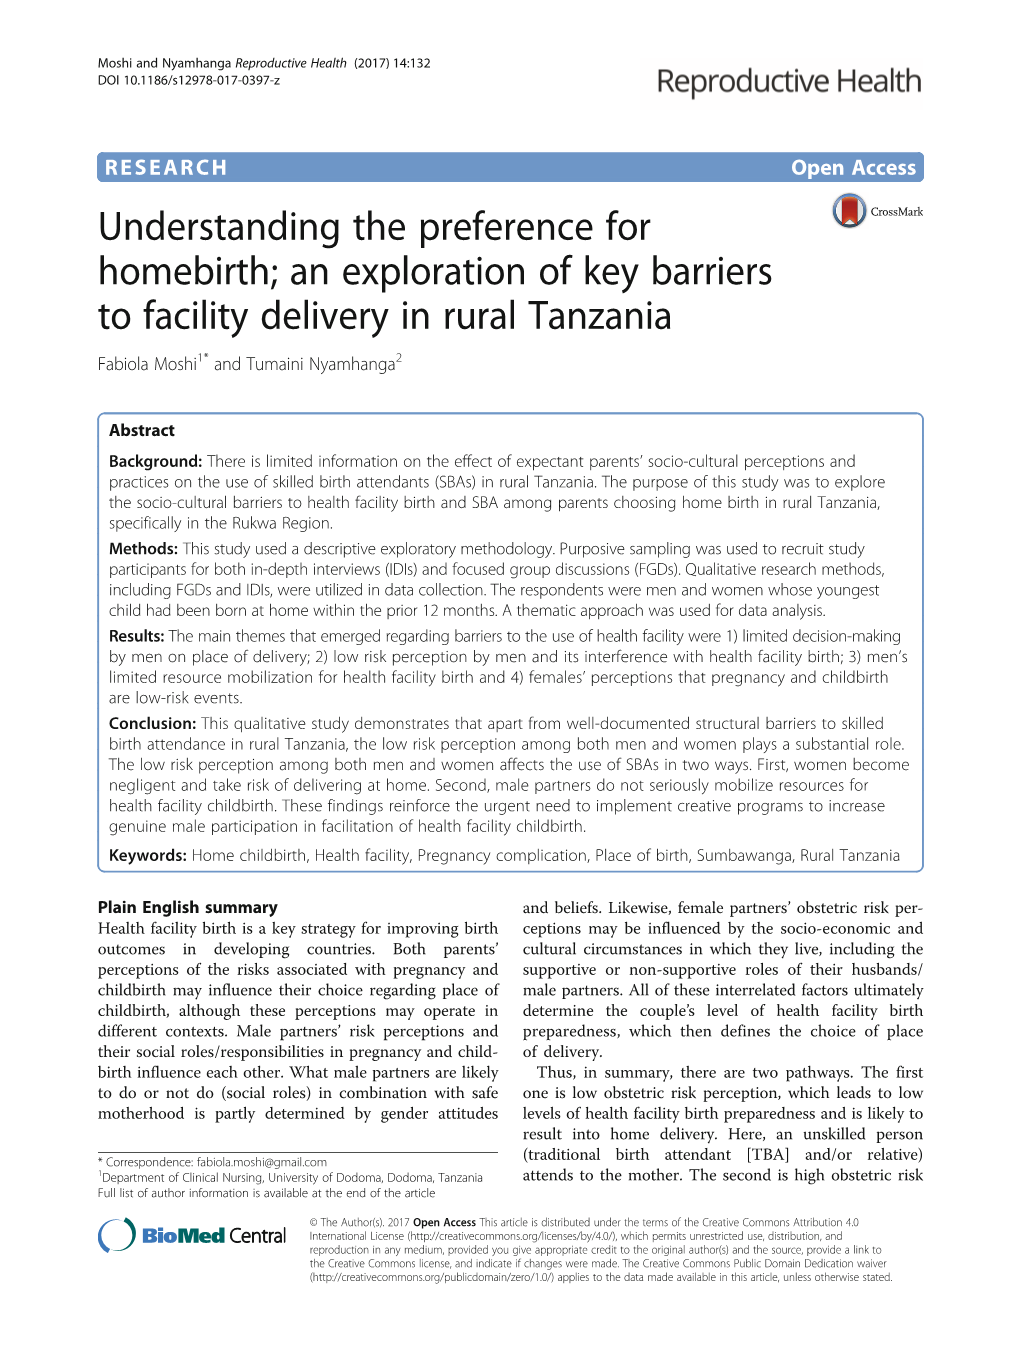 An Exploration of Key Barriers to Facility Delivery in Rural Tanzania Fabiola Moshi1* and Tumaini Nyamhanga2